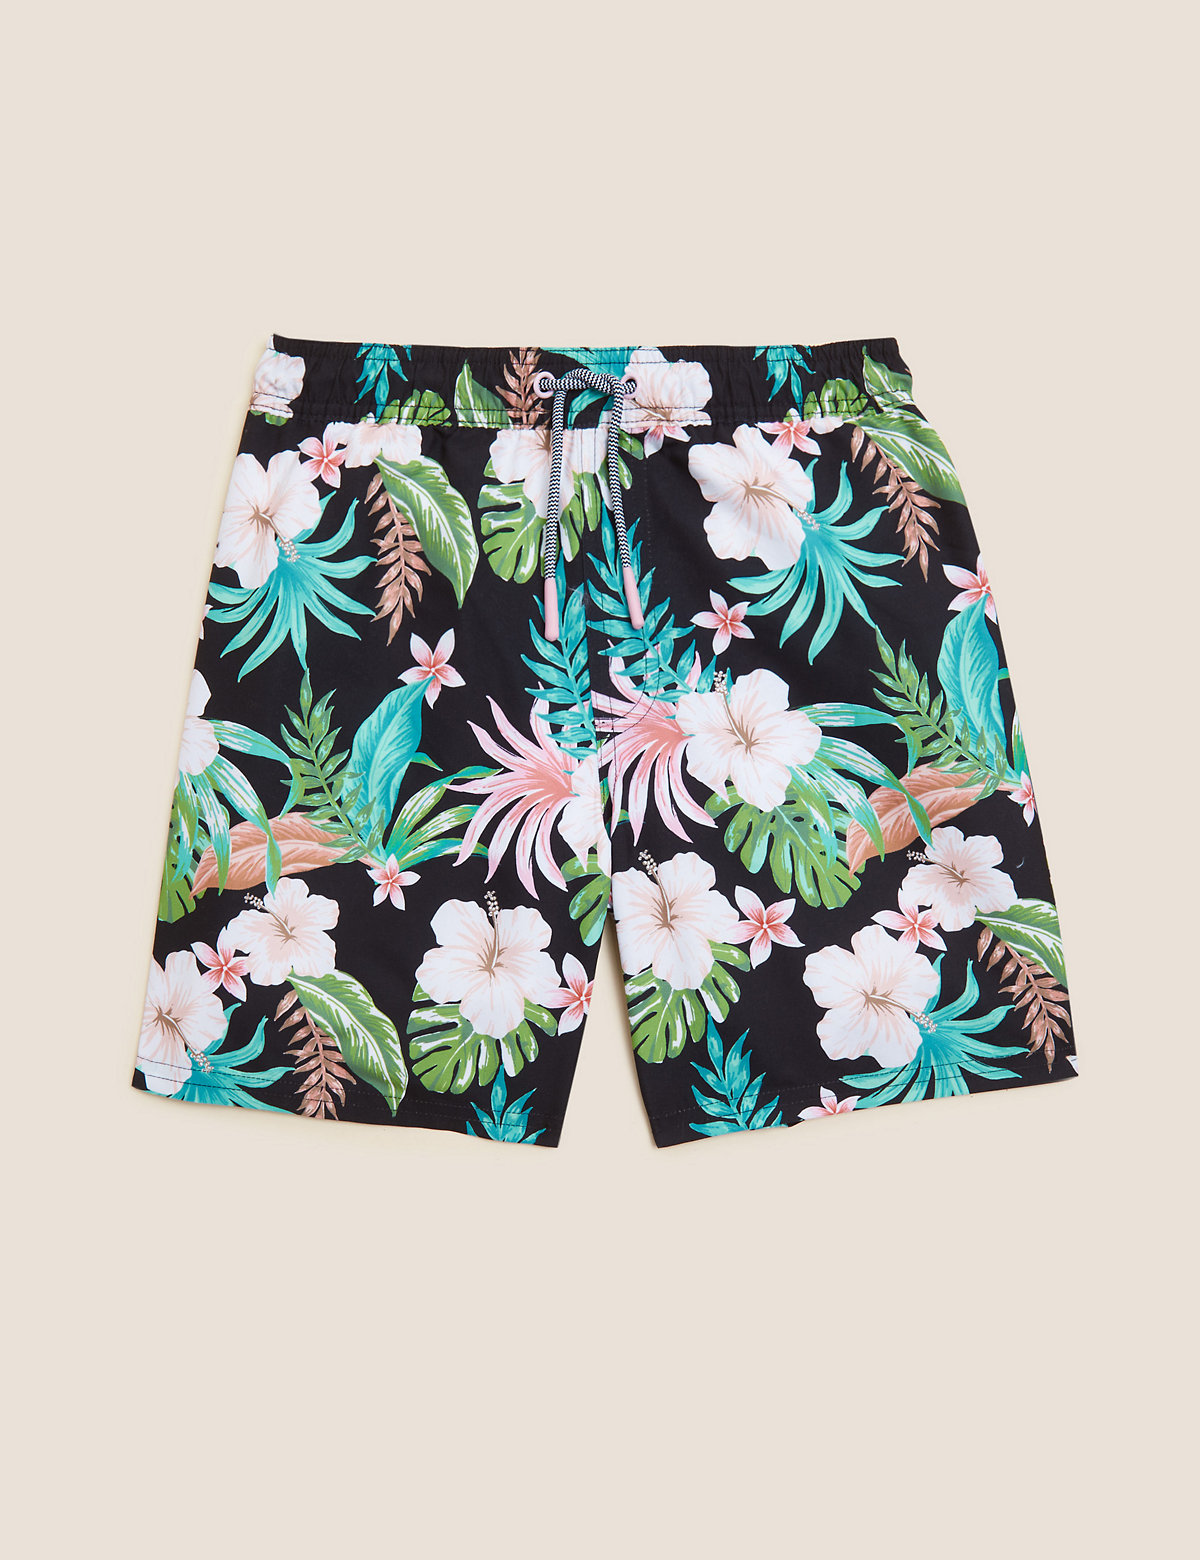 Tropical Print Swim Shorts (6-16 Yrs)